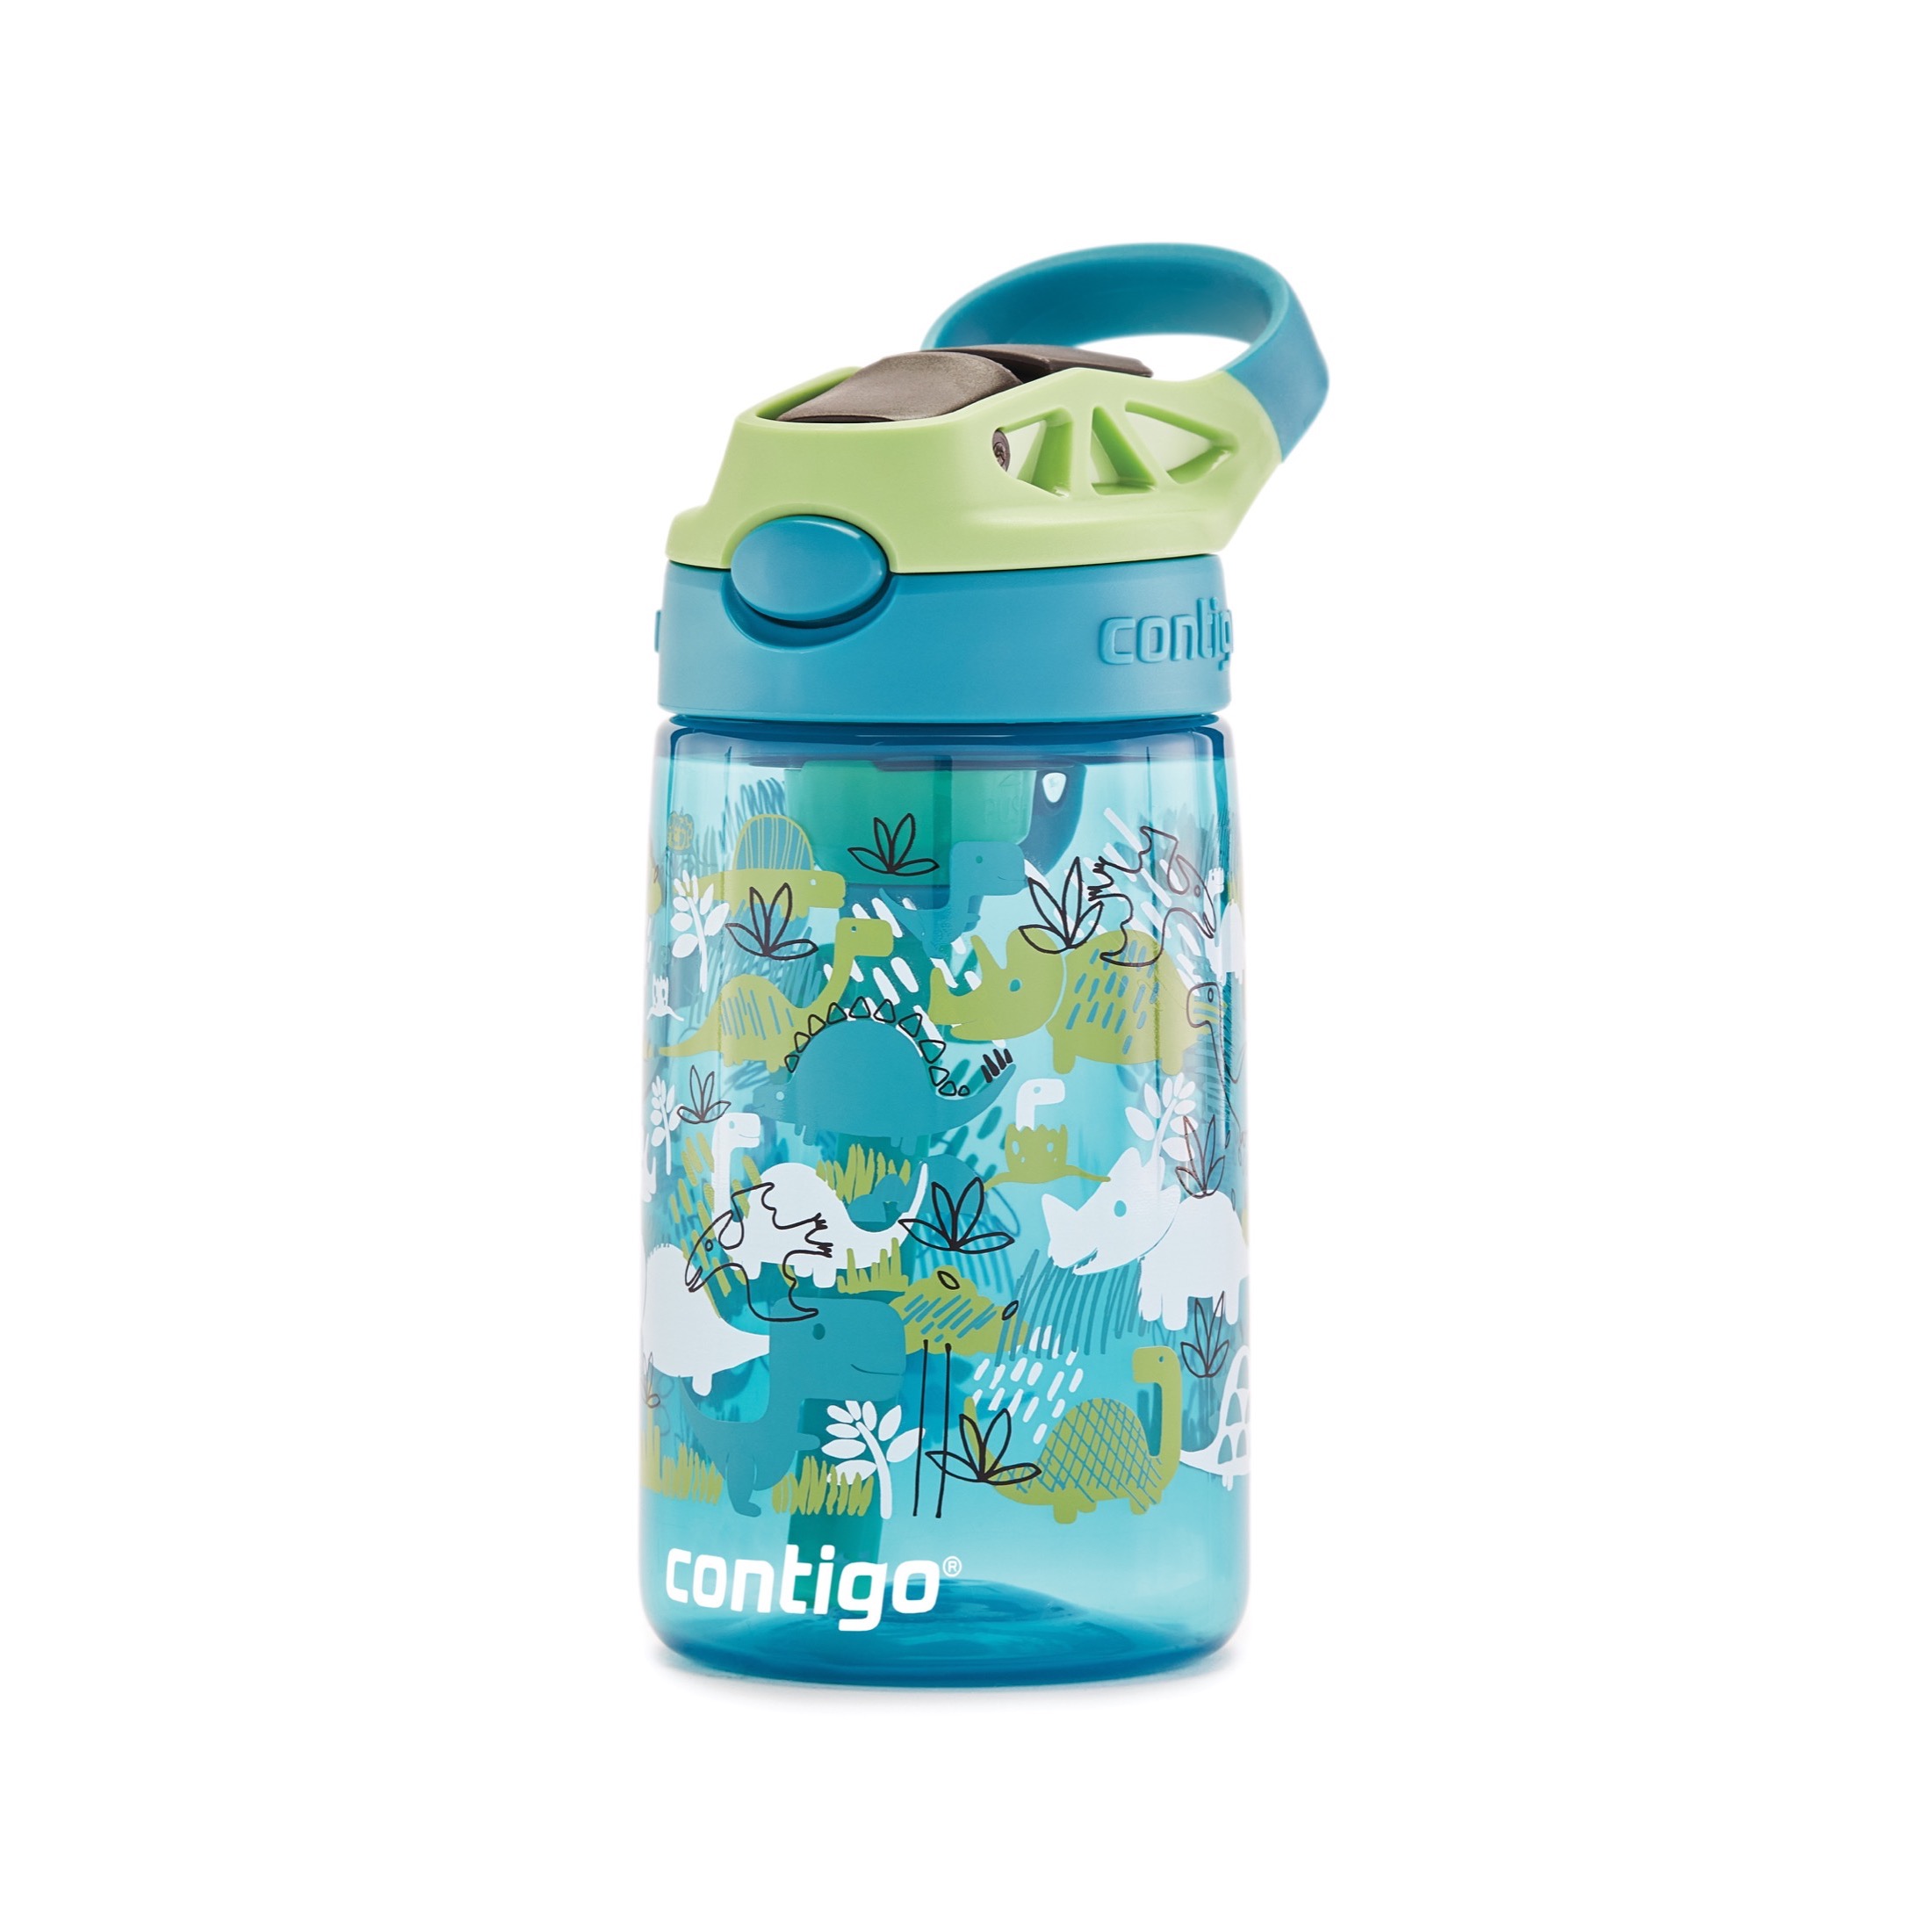 Contigo Kids Water Bottle with Autospout Straw Green & Blue, 14 fl oz. - image 2 of 8